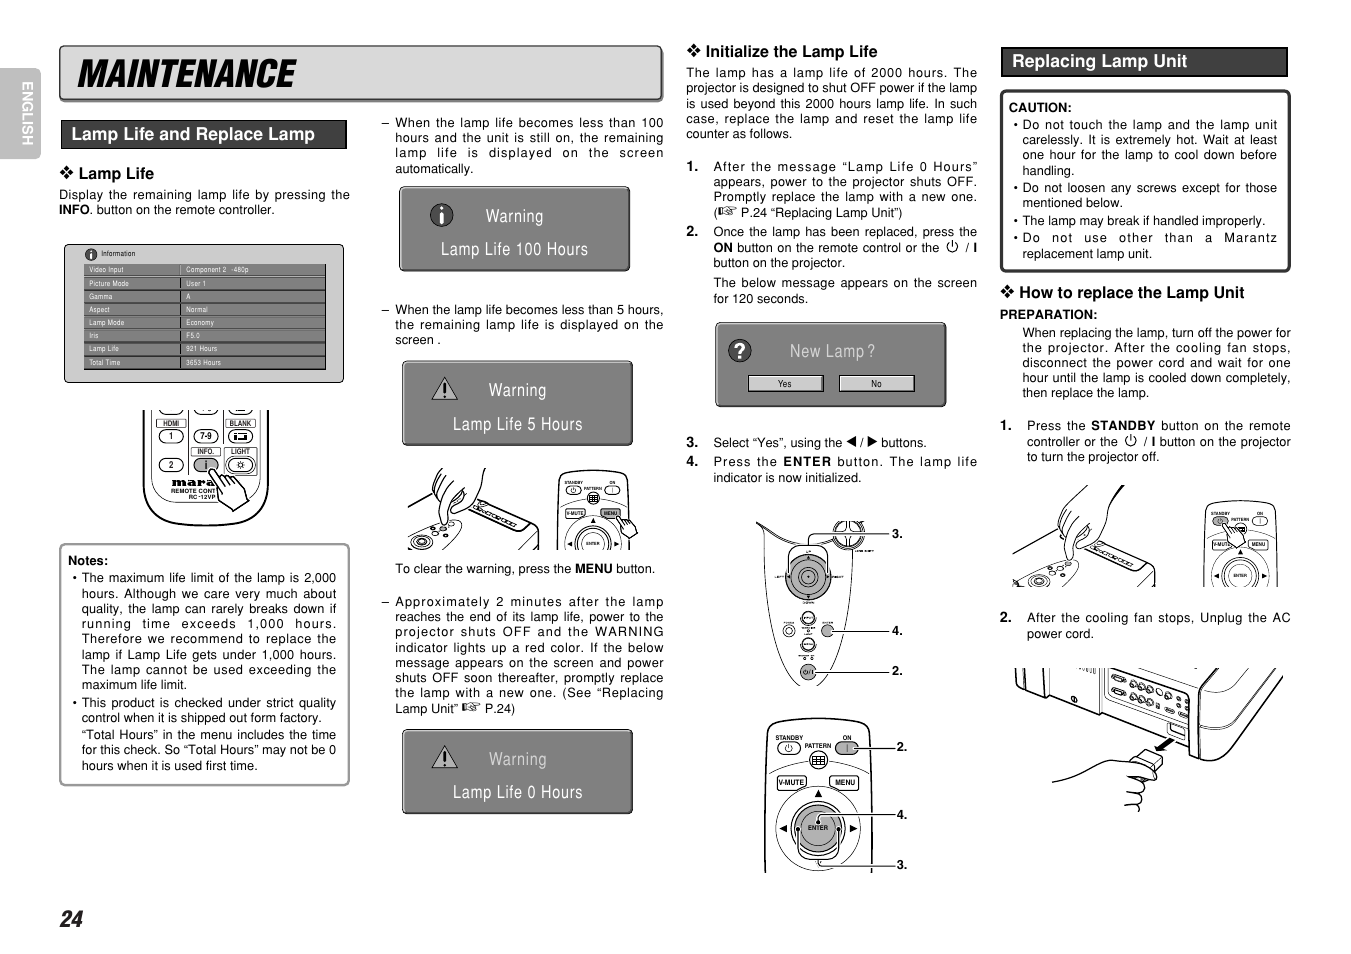 Maintenance, Replacing lamp unit, Lamp life and replace lamp | Lamp life 0 hours warning, New lamp | Marantz VP-12S4 User Manual | Page 30 / 37